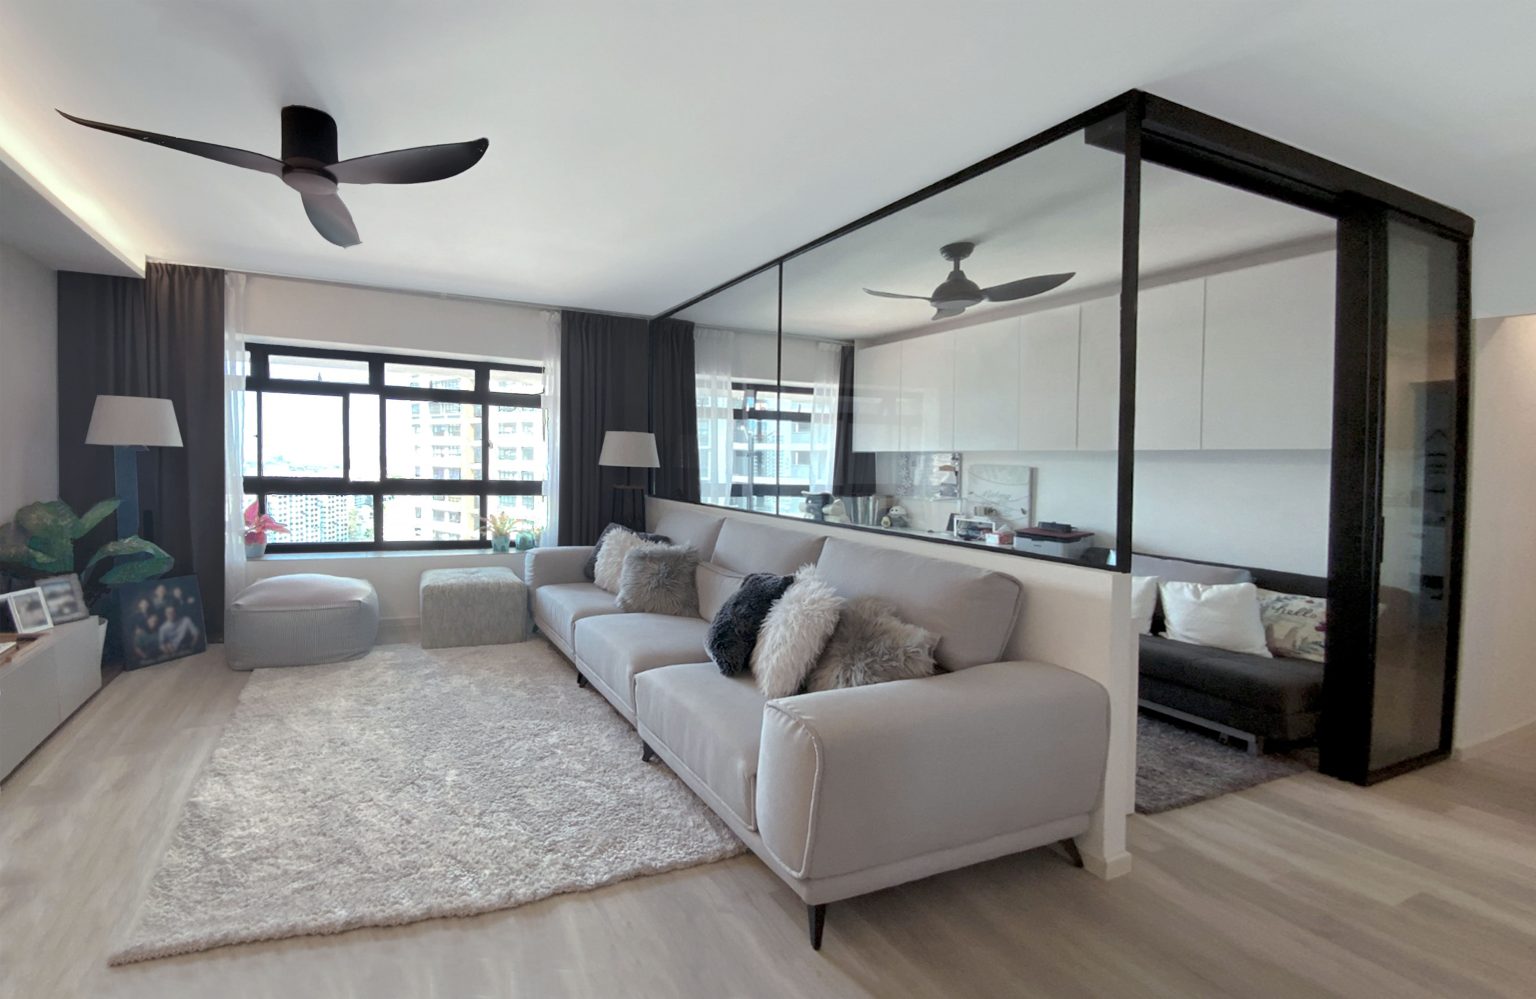 Hdb 3 Room Flat Living Room Design